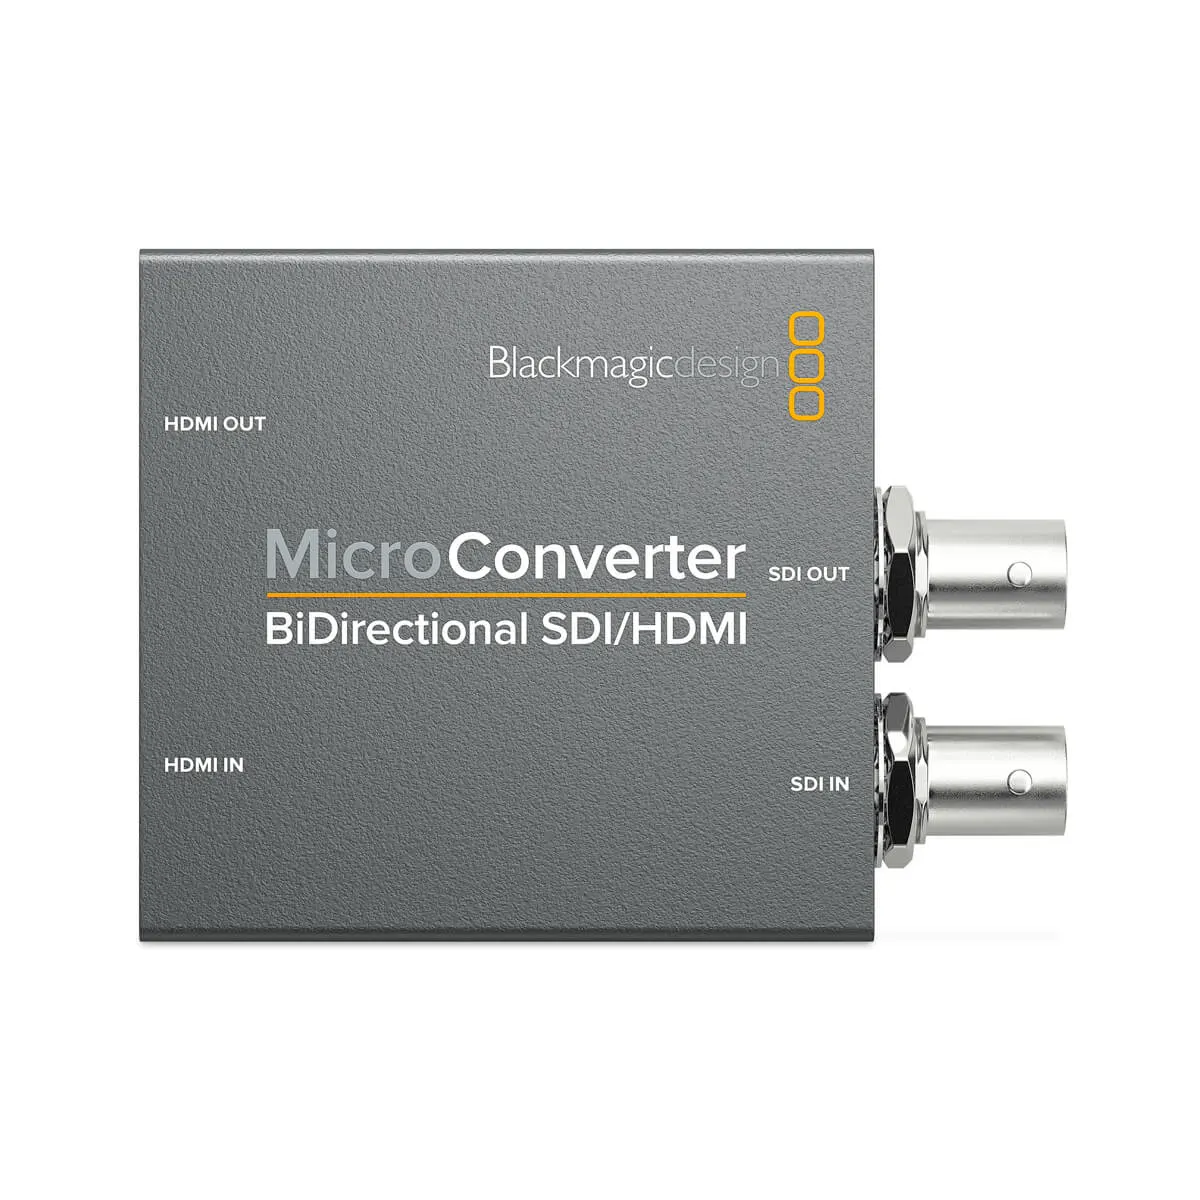 Blackmagic Micro Converter BiDirect SDI/HDMI vista superior